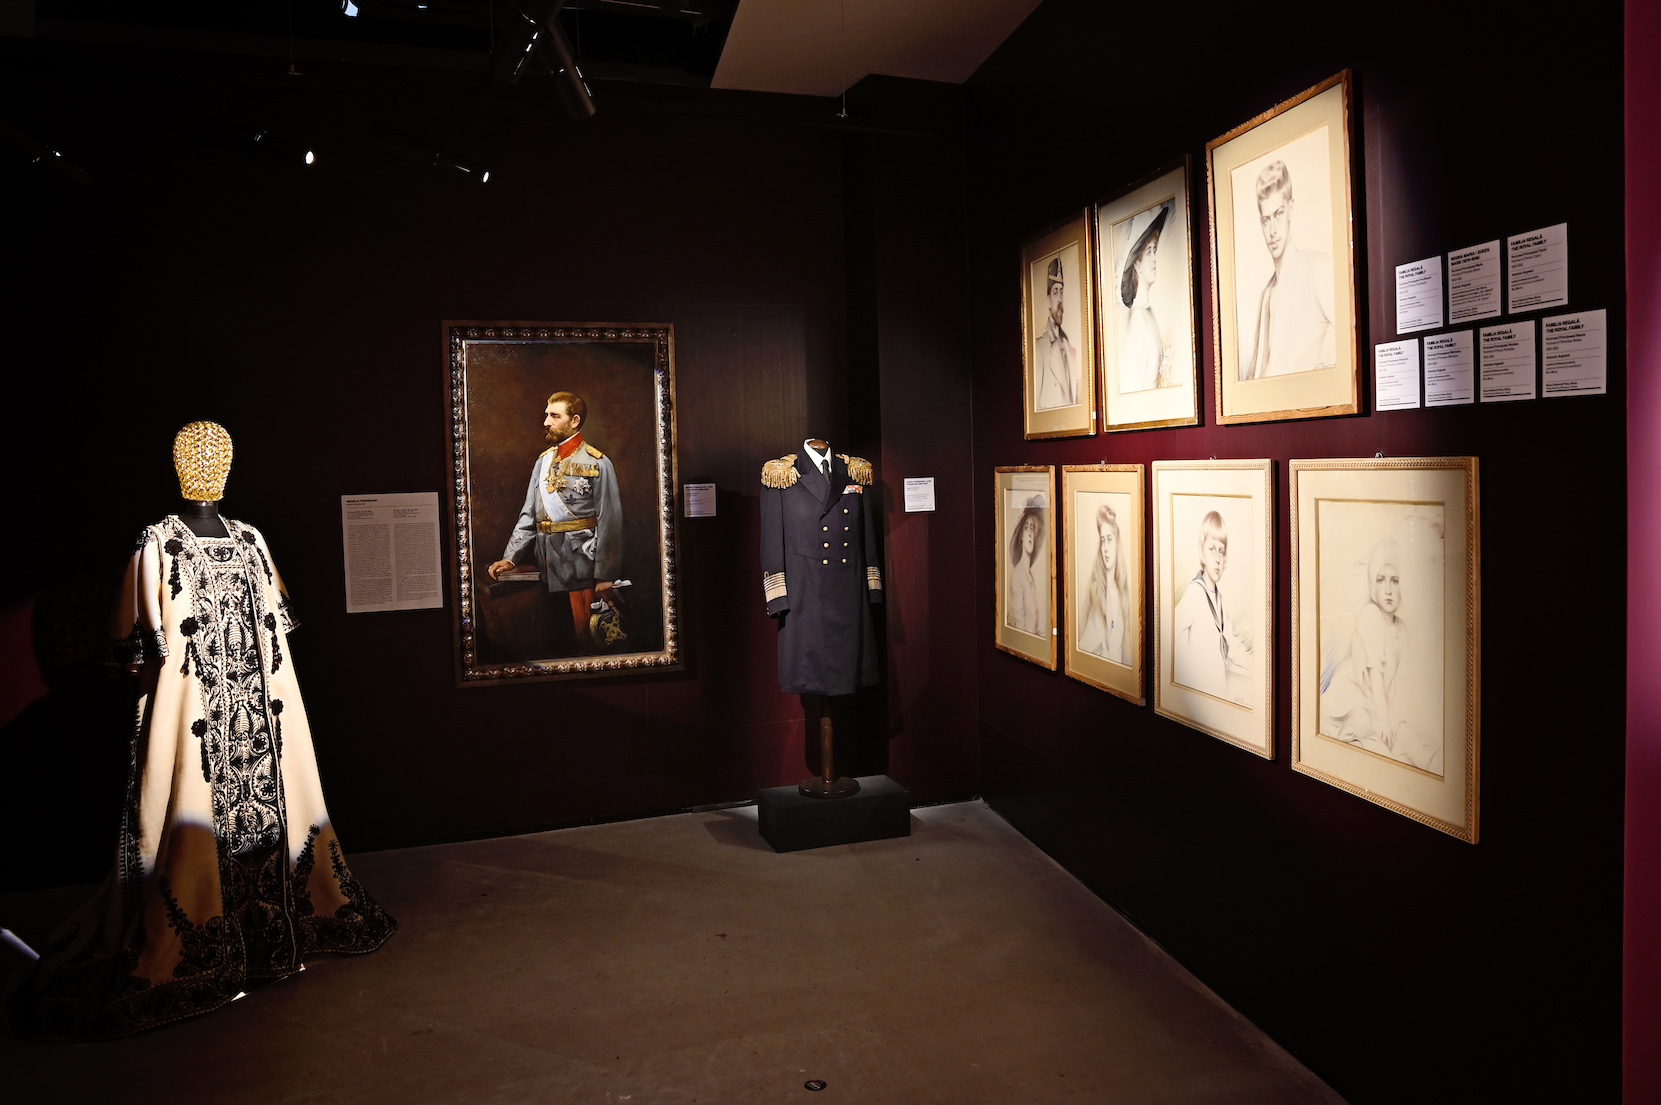 Art Safari exhibition in Bucharest tells ‘History of Romania in 100 Portraits’